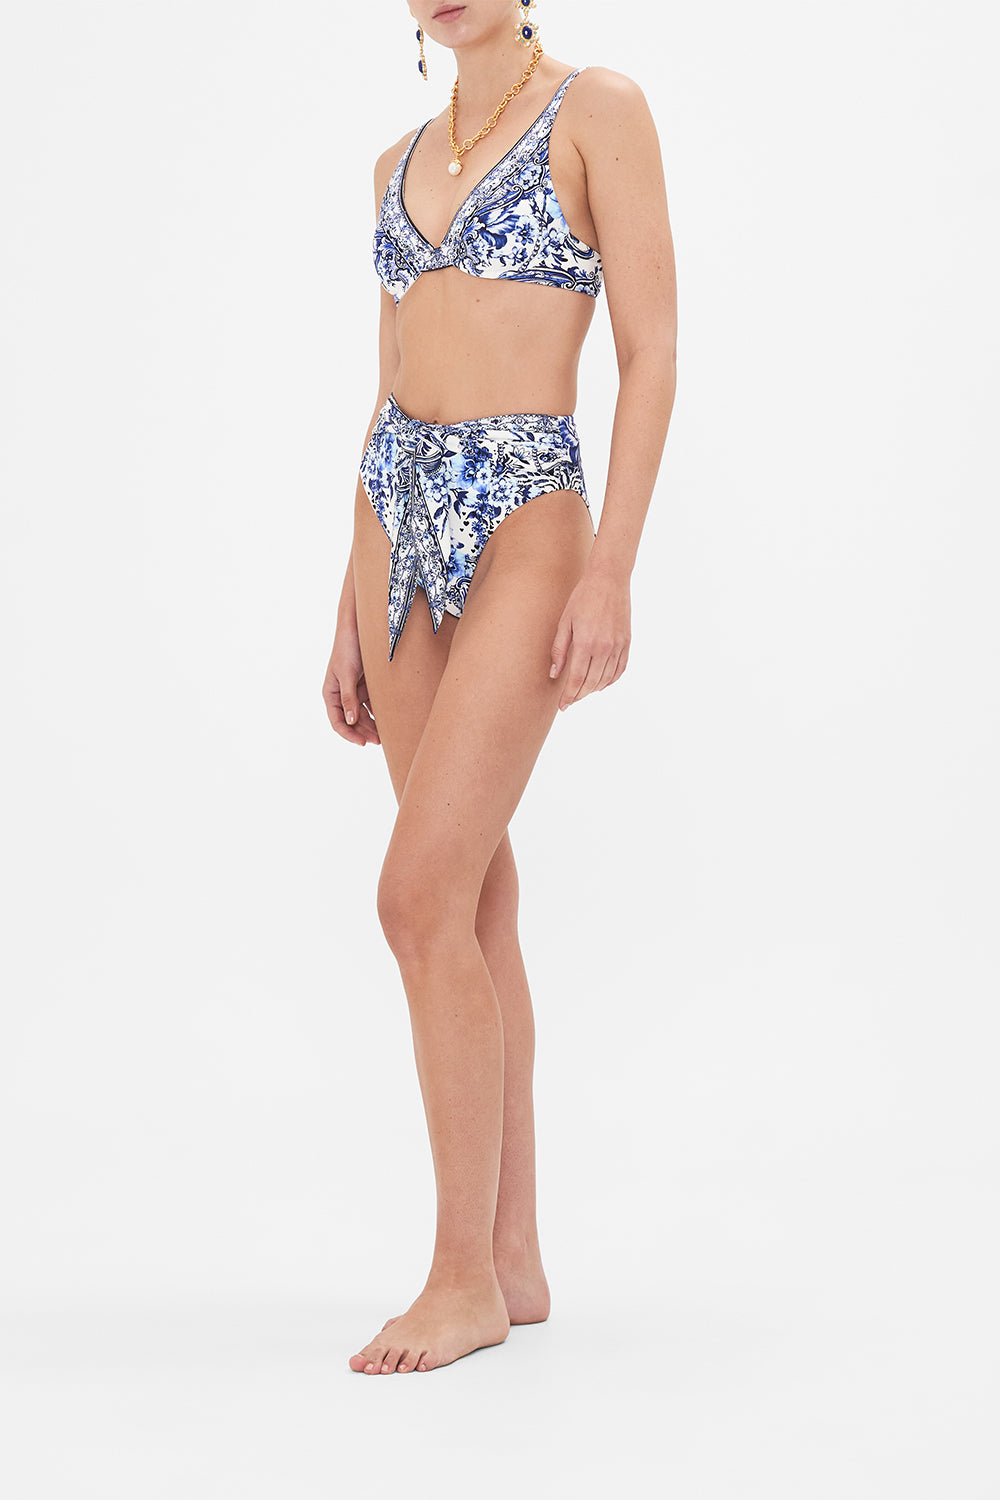 Side view of model wearing CAMILLA womens underwire bikini top in Glaze and Graze print